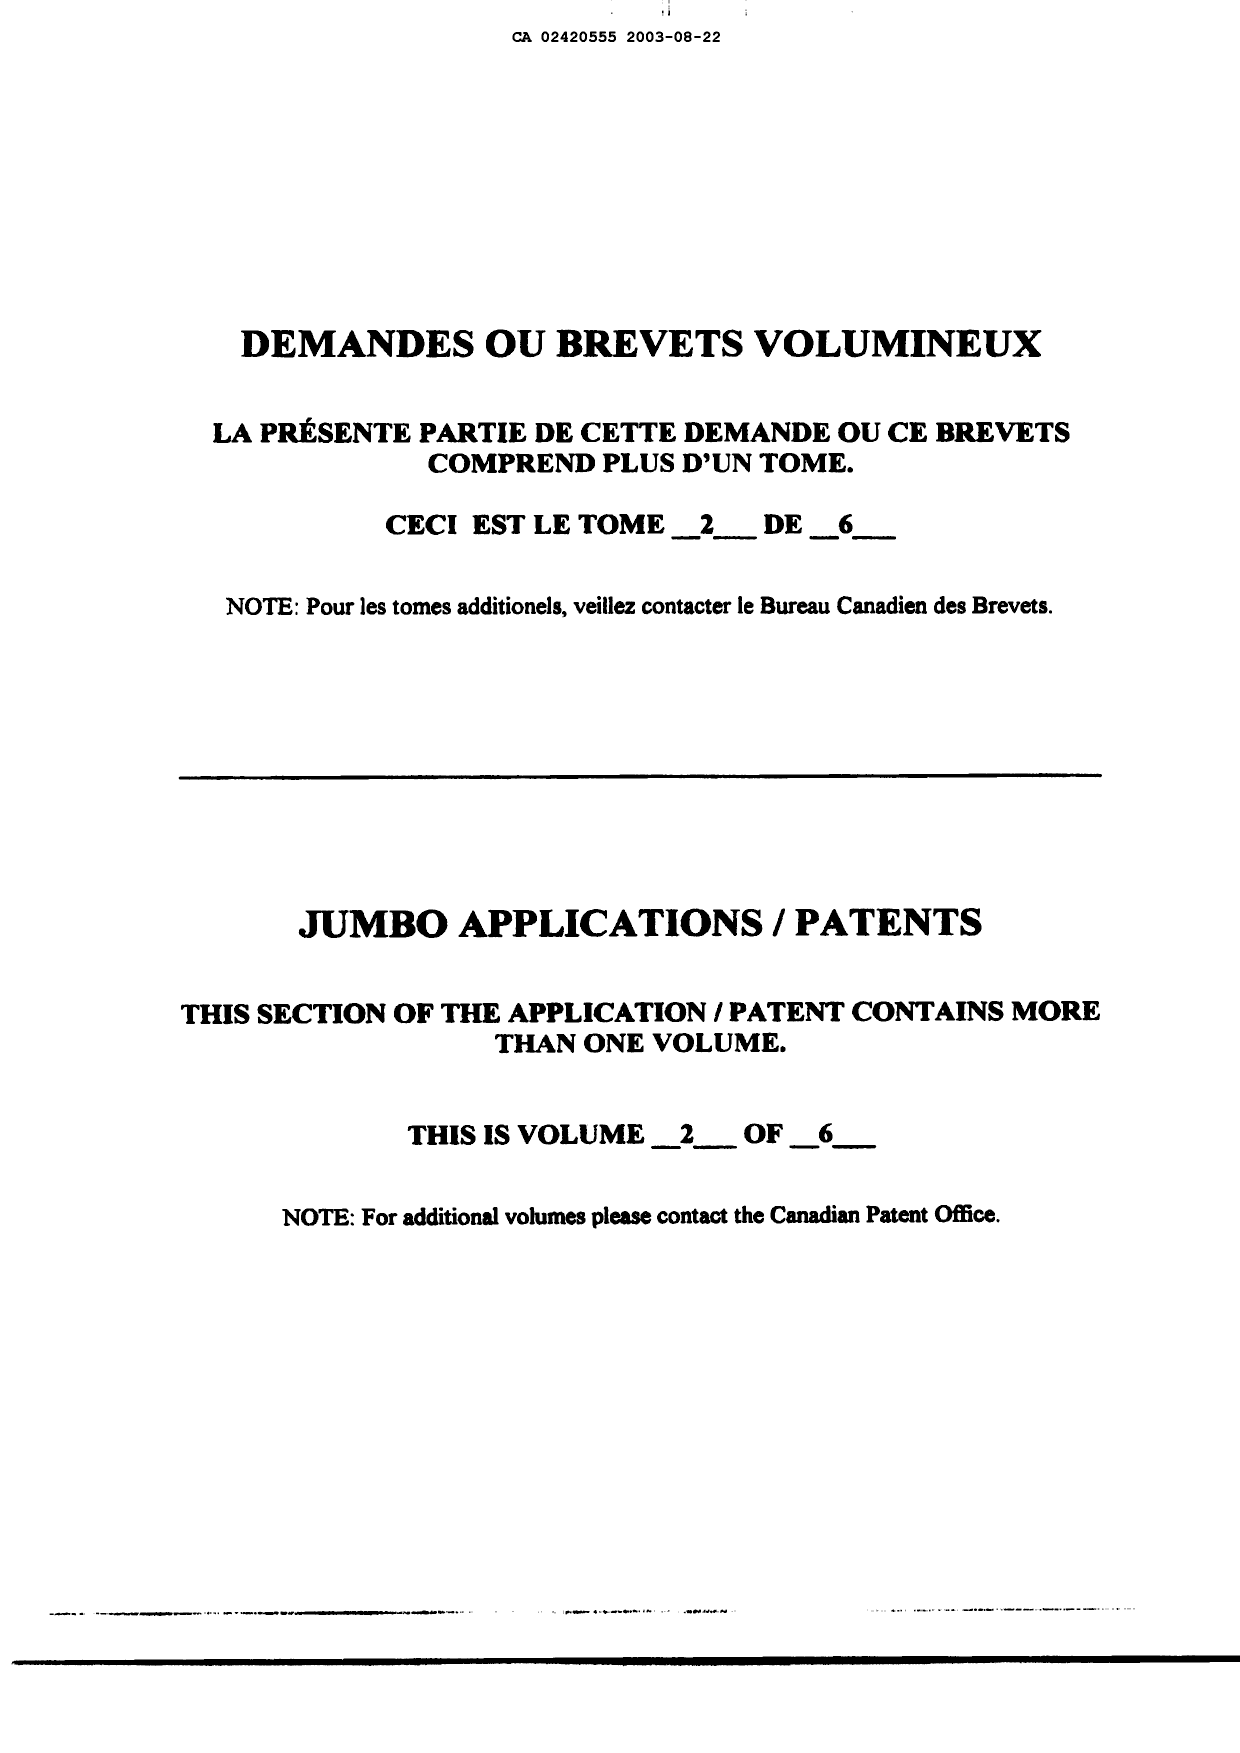 Canadian Patent Document 2420555. Correspondence 20021222. Image 1 of 950